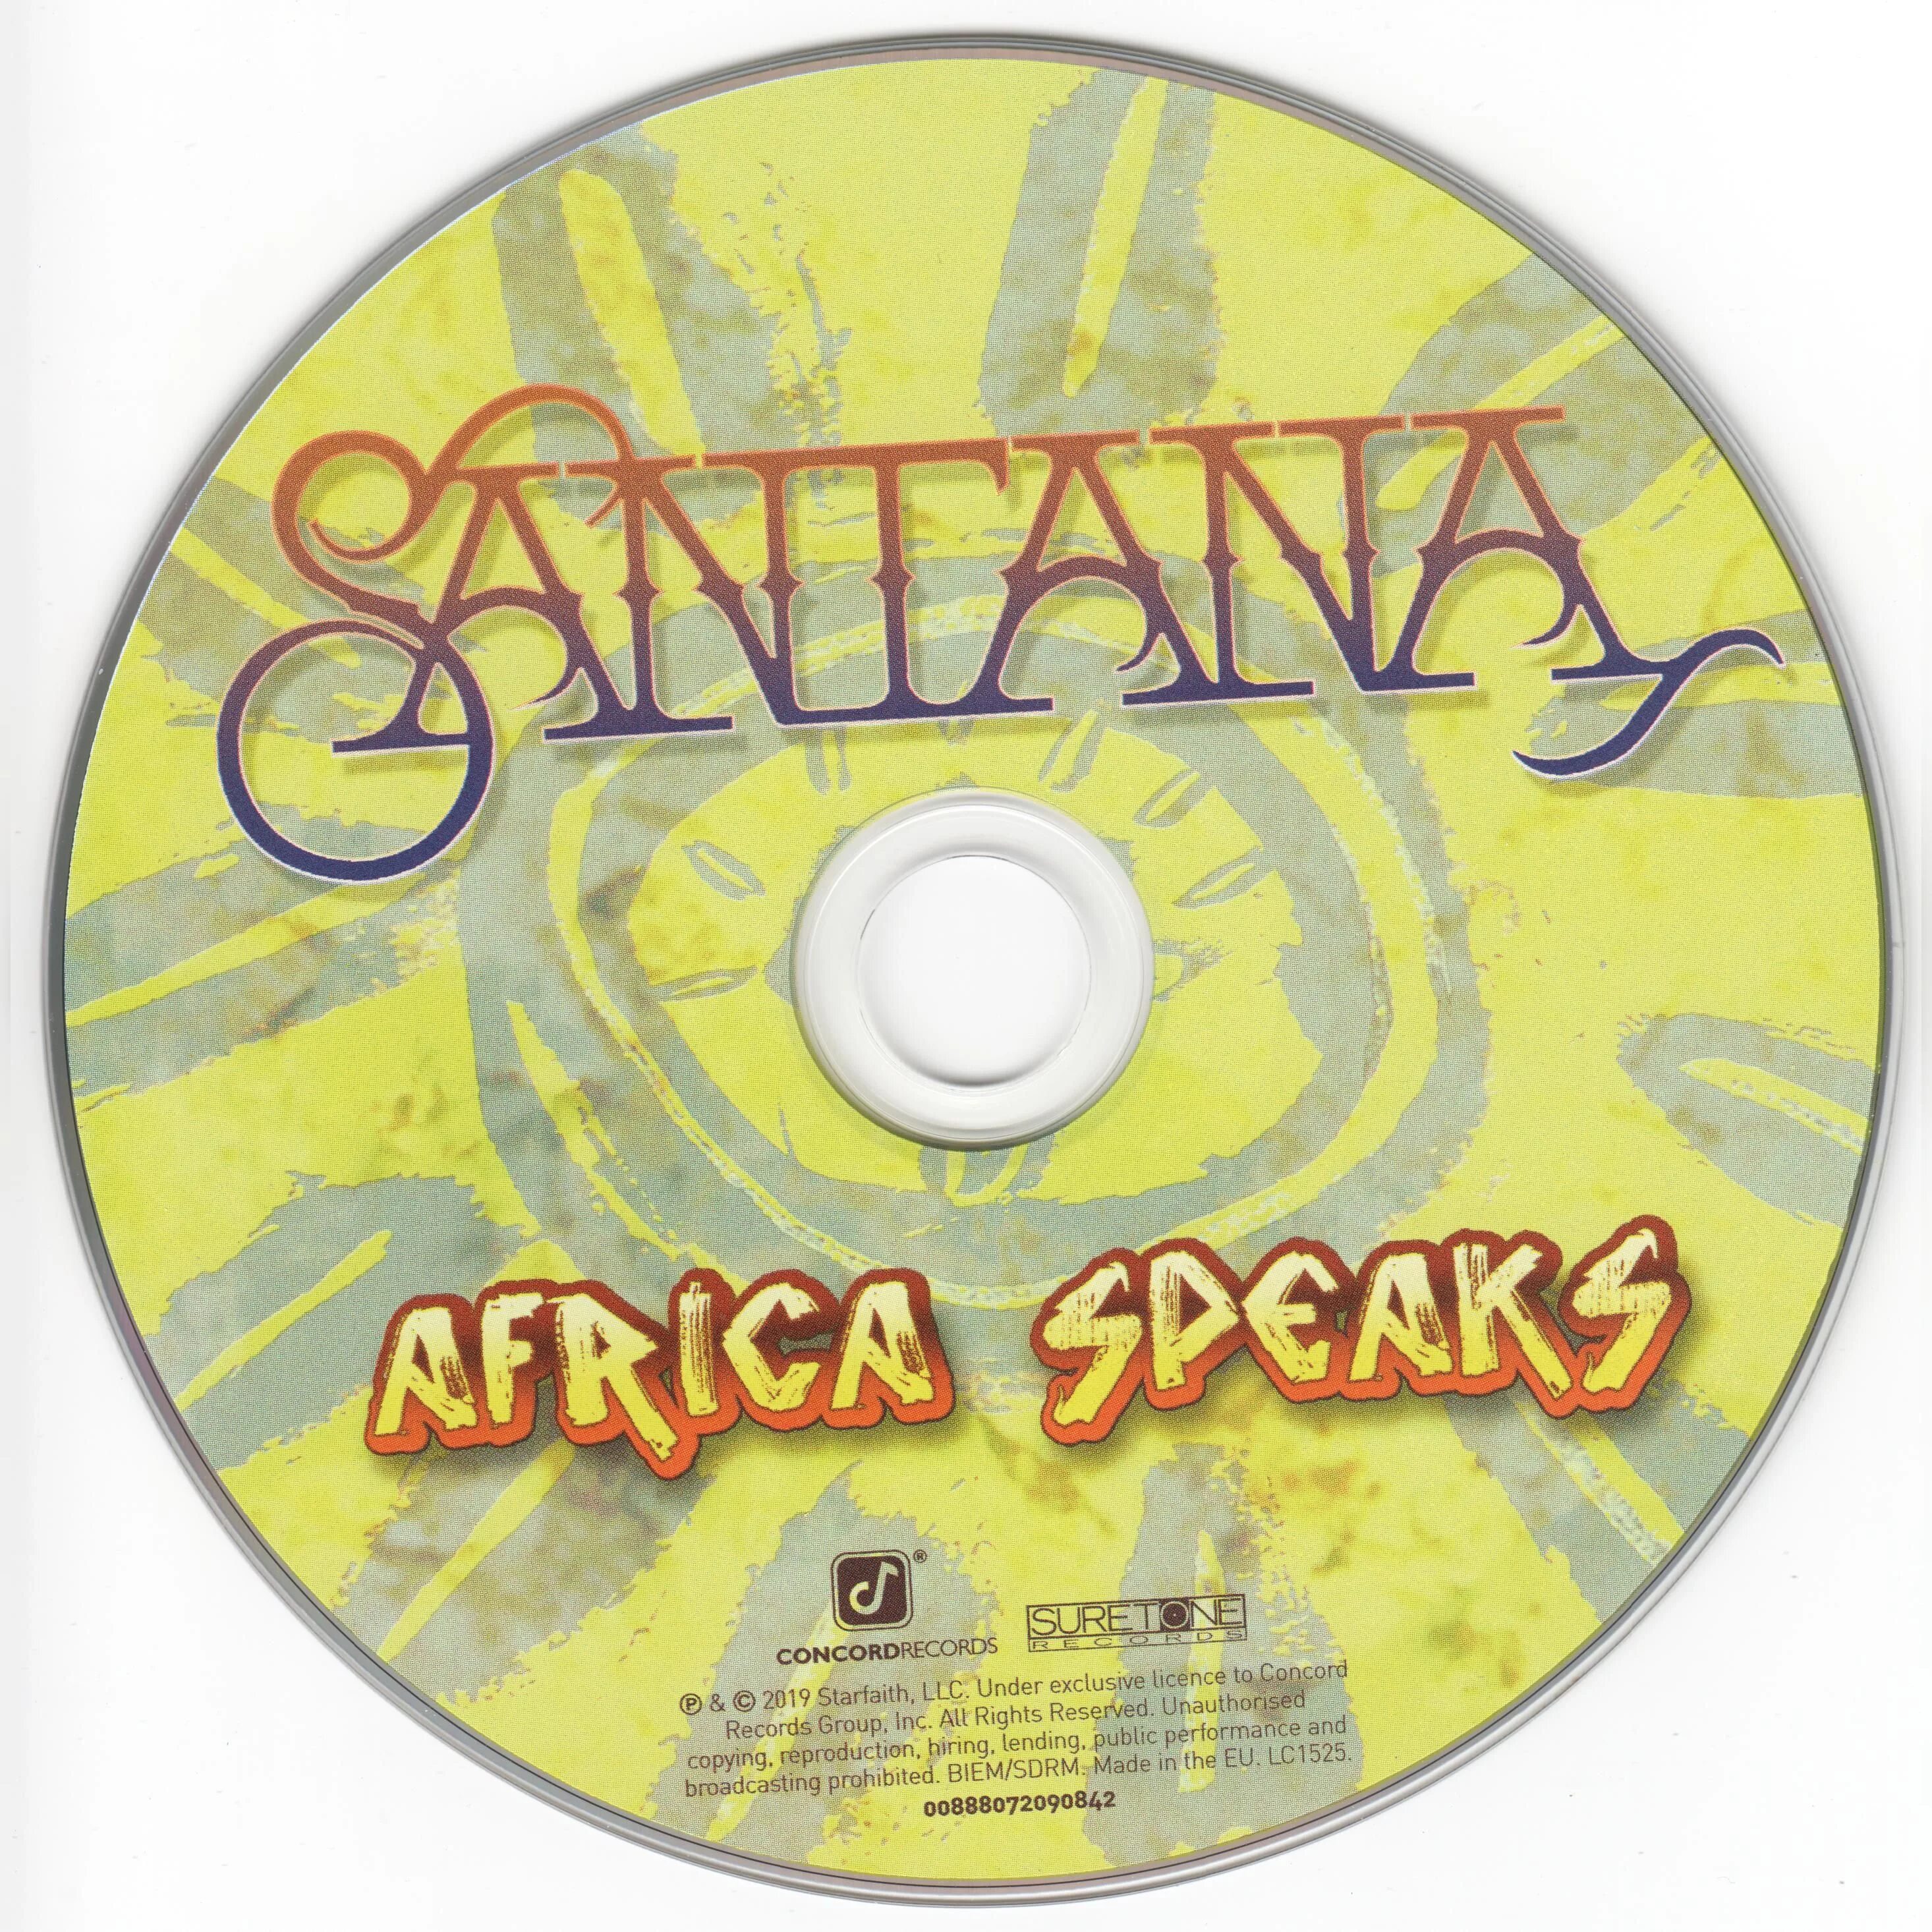 Speak mp3. Santana Africa speaks 2019. CD Santana: Africa speaks. Santana "Shango, CD". LP Santana: Africa speaks.